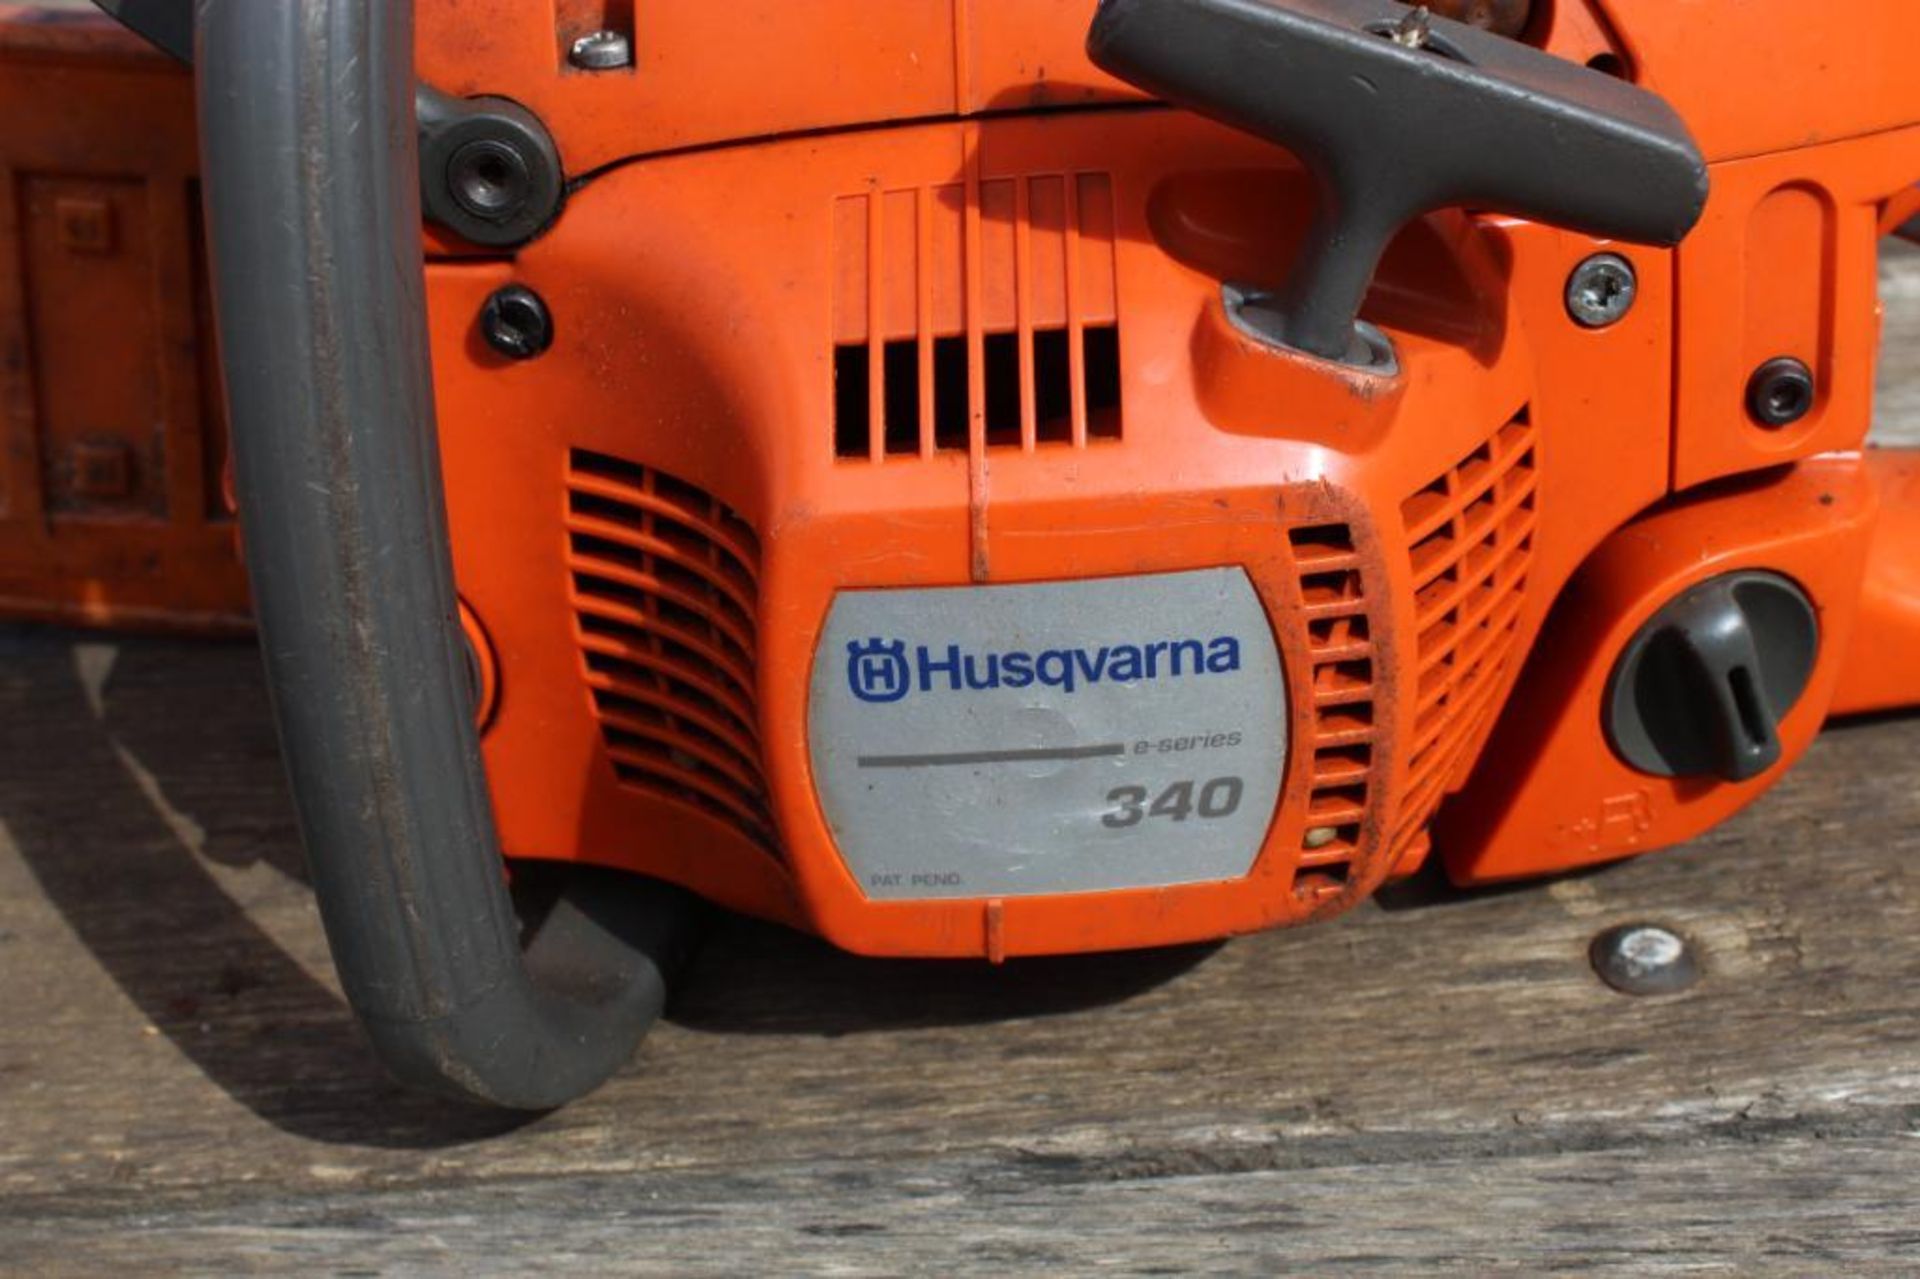 Husqvarna 340 Gas Chain Saw - Image 2 of 2